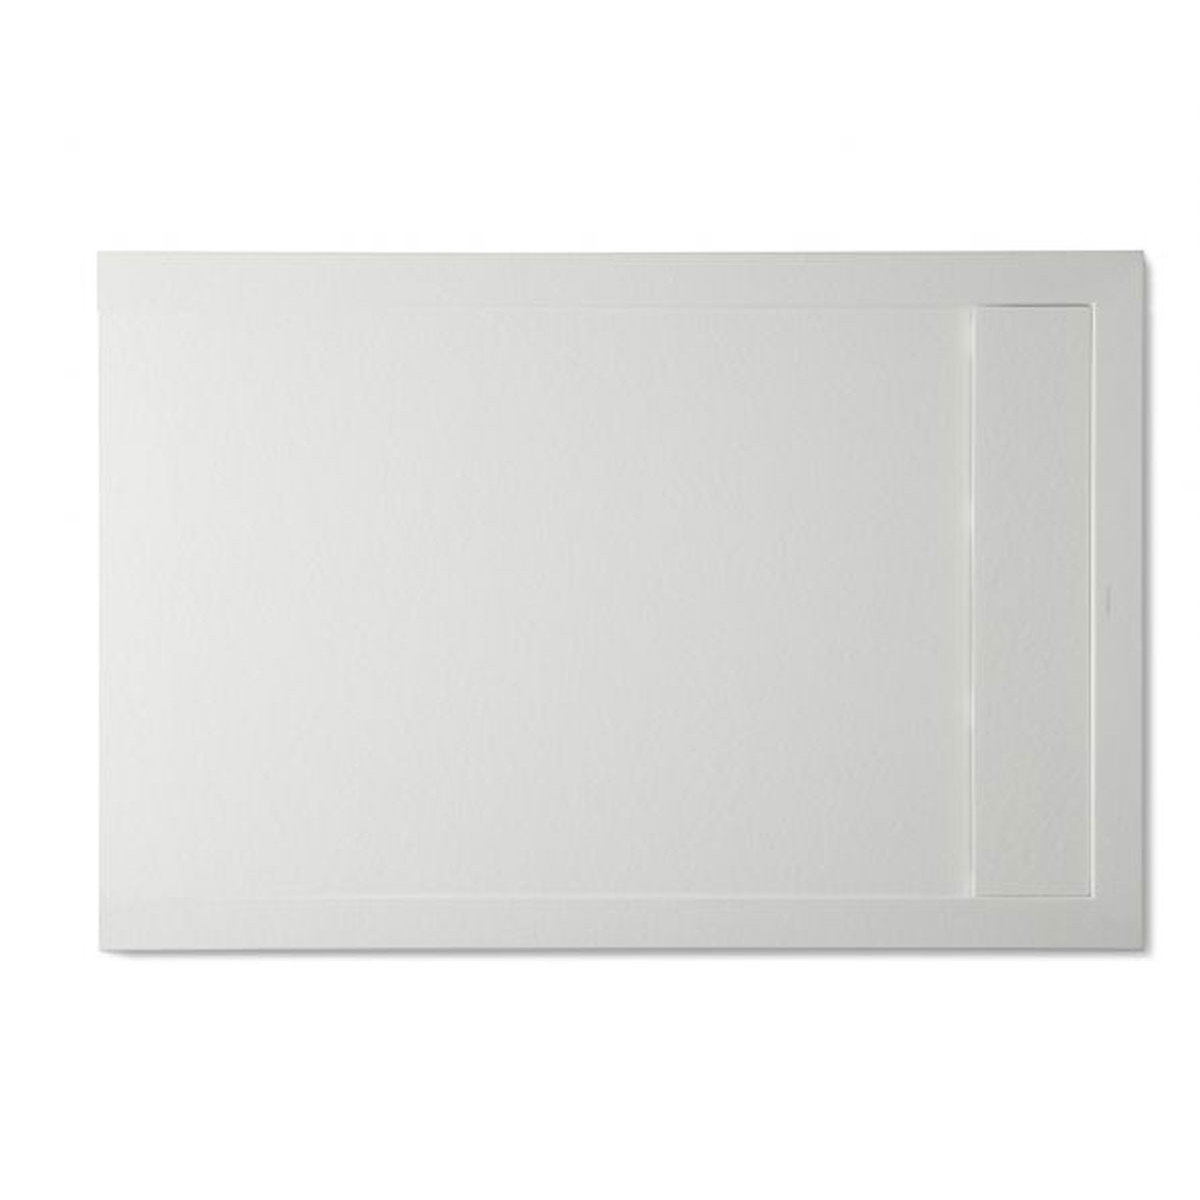 McBath - Plato de Ducha de Resina de 120 x 80 cm - Plato de ducha rectangular 120x80 Andrómeda Stone Cover Blanco